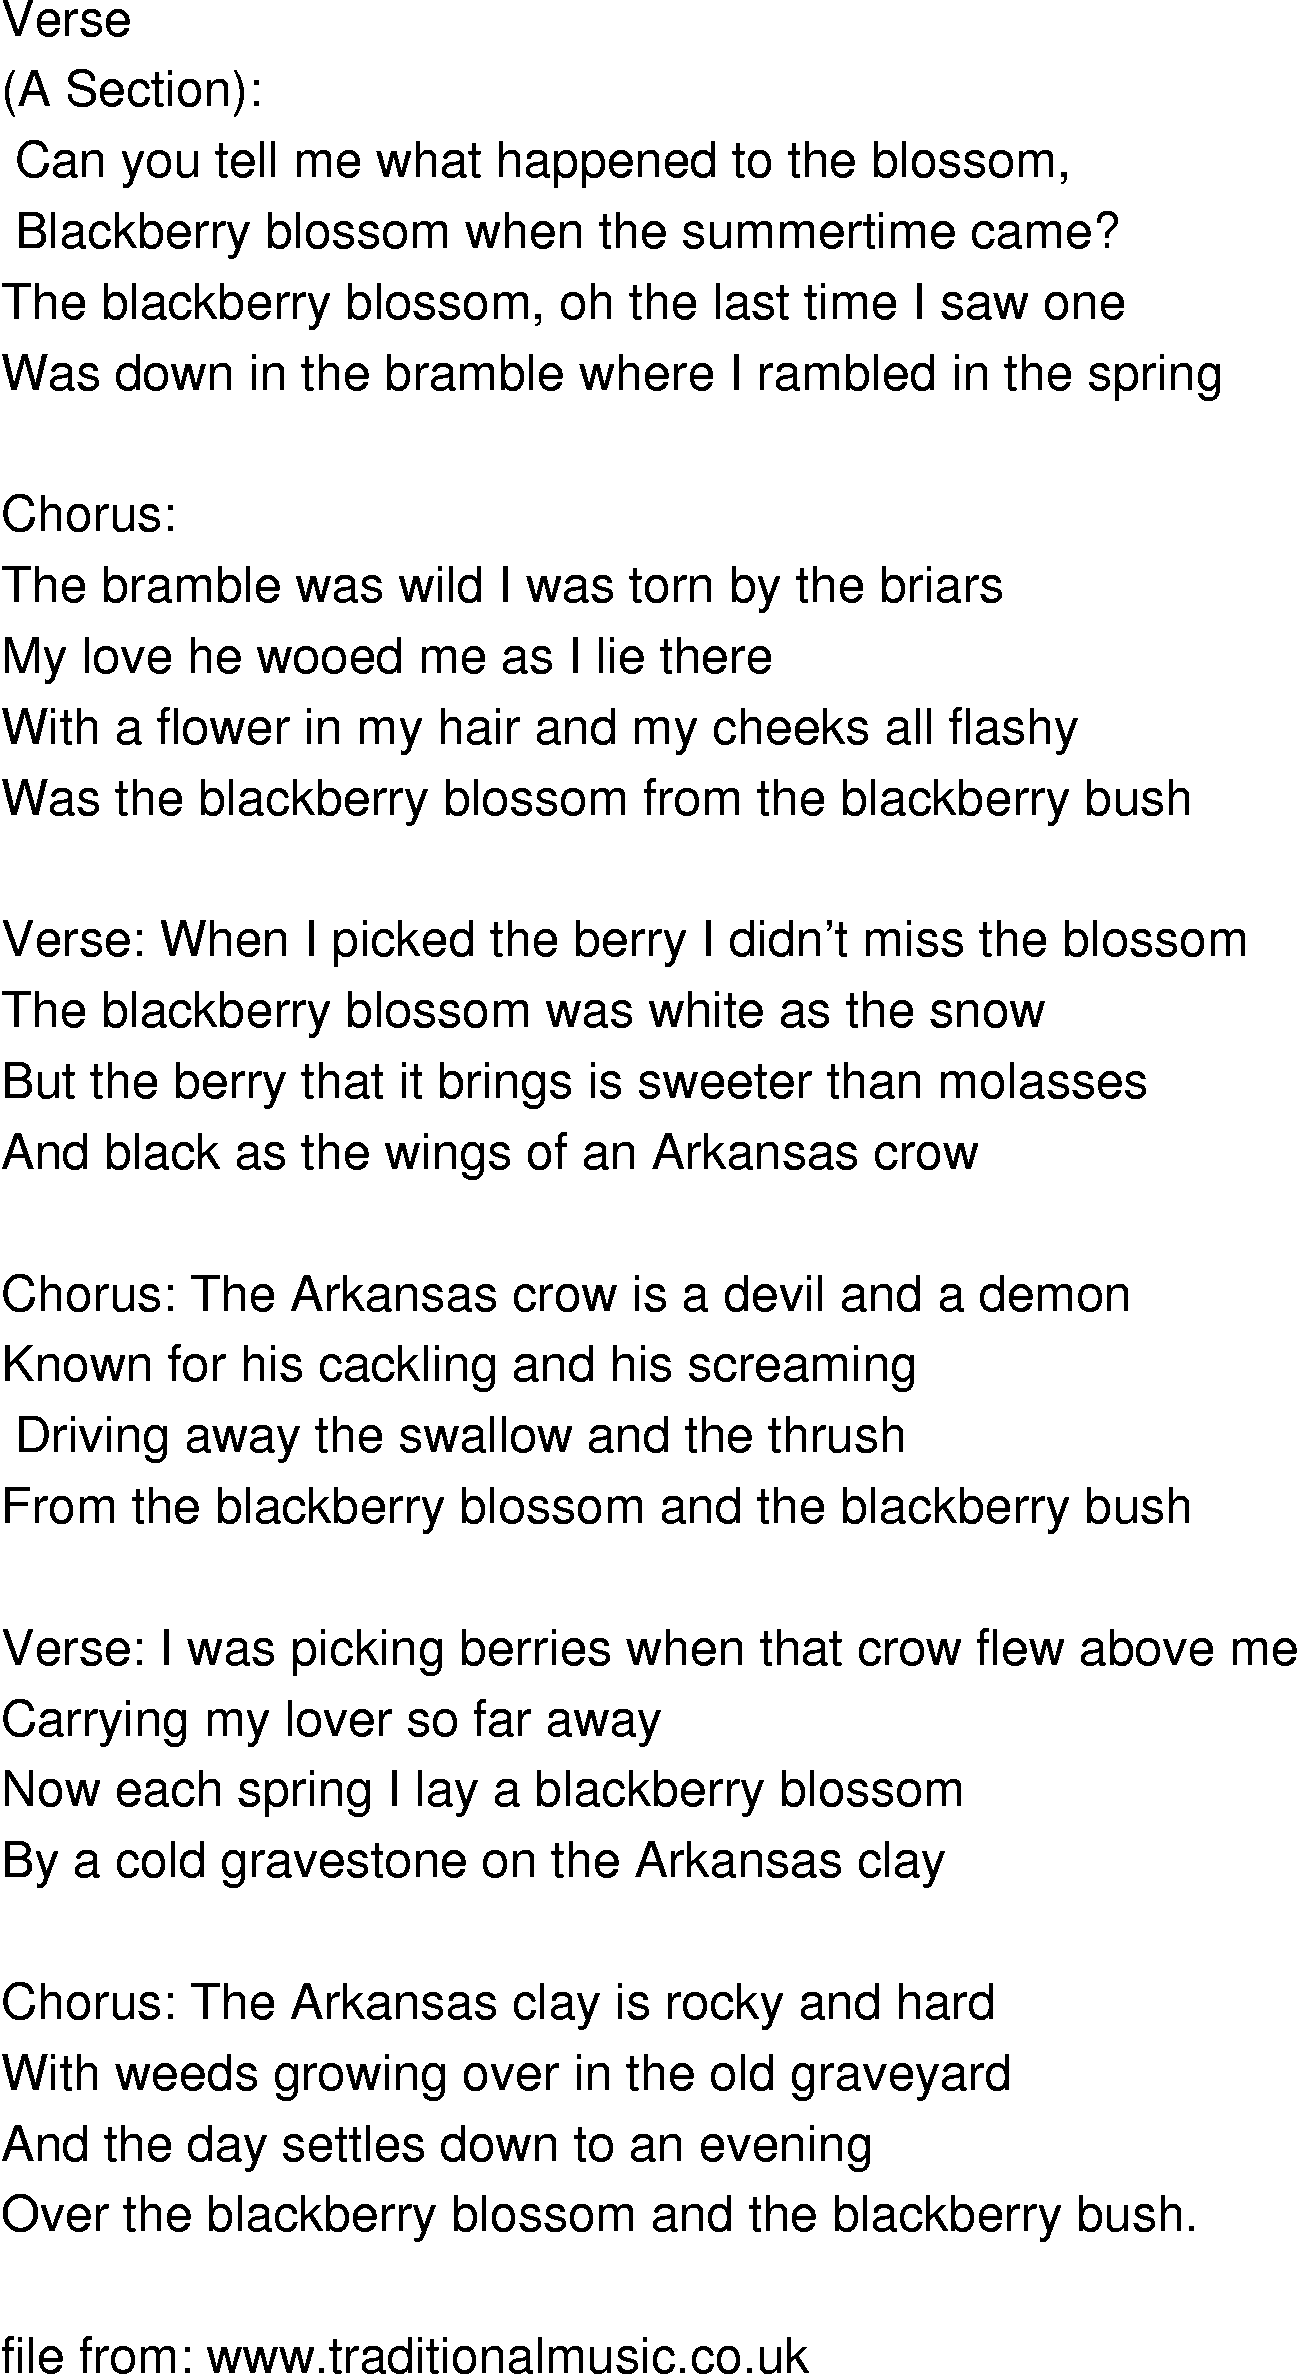 Old-Time (oldtimey) Song Lyrics - blackberry blossom